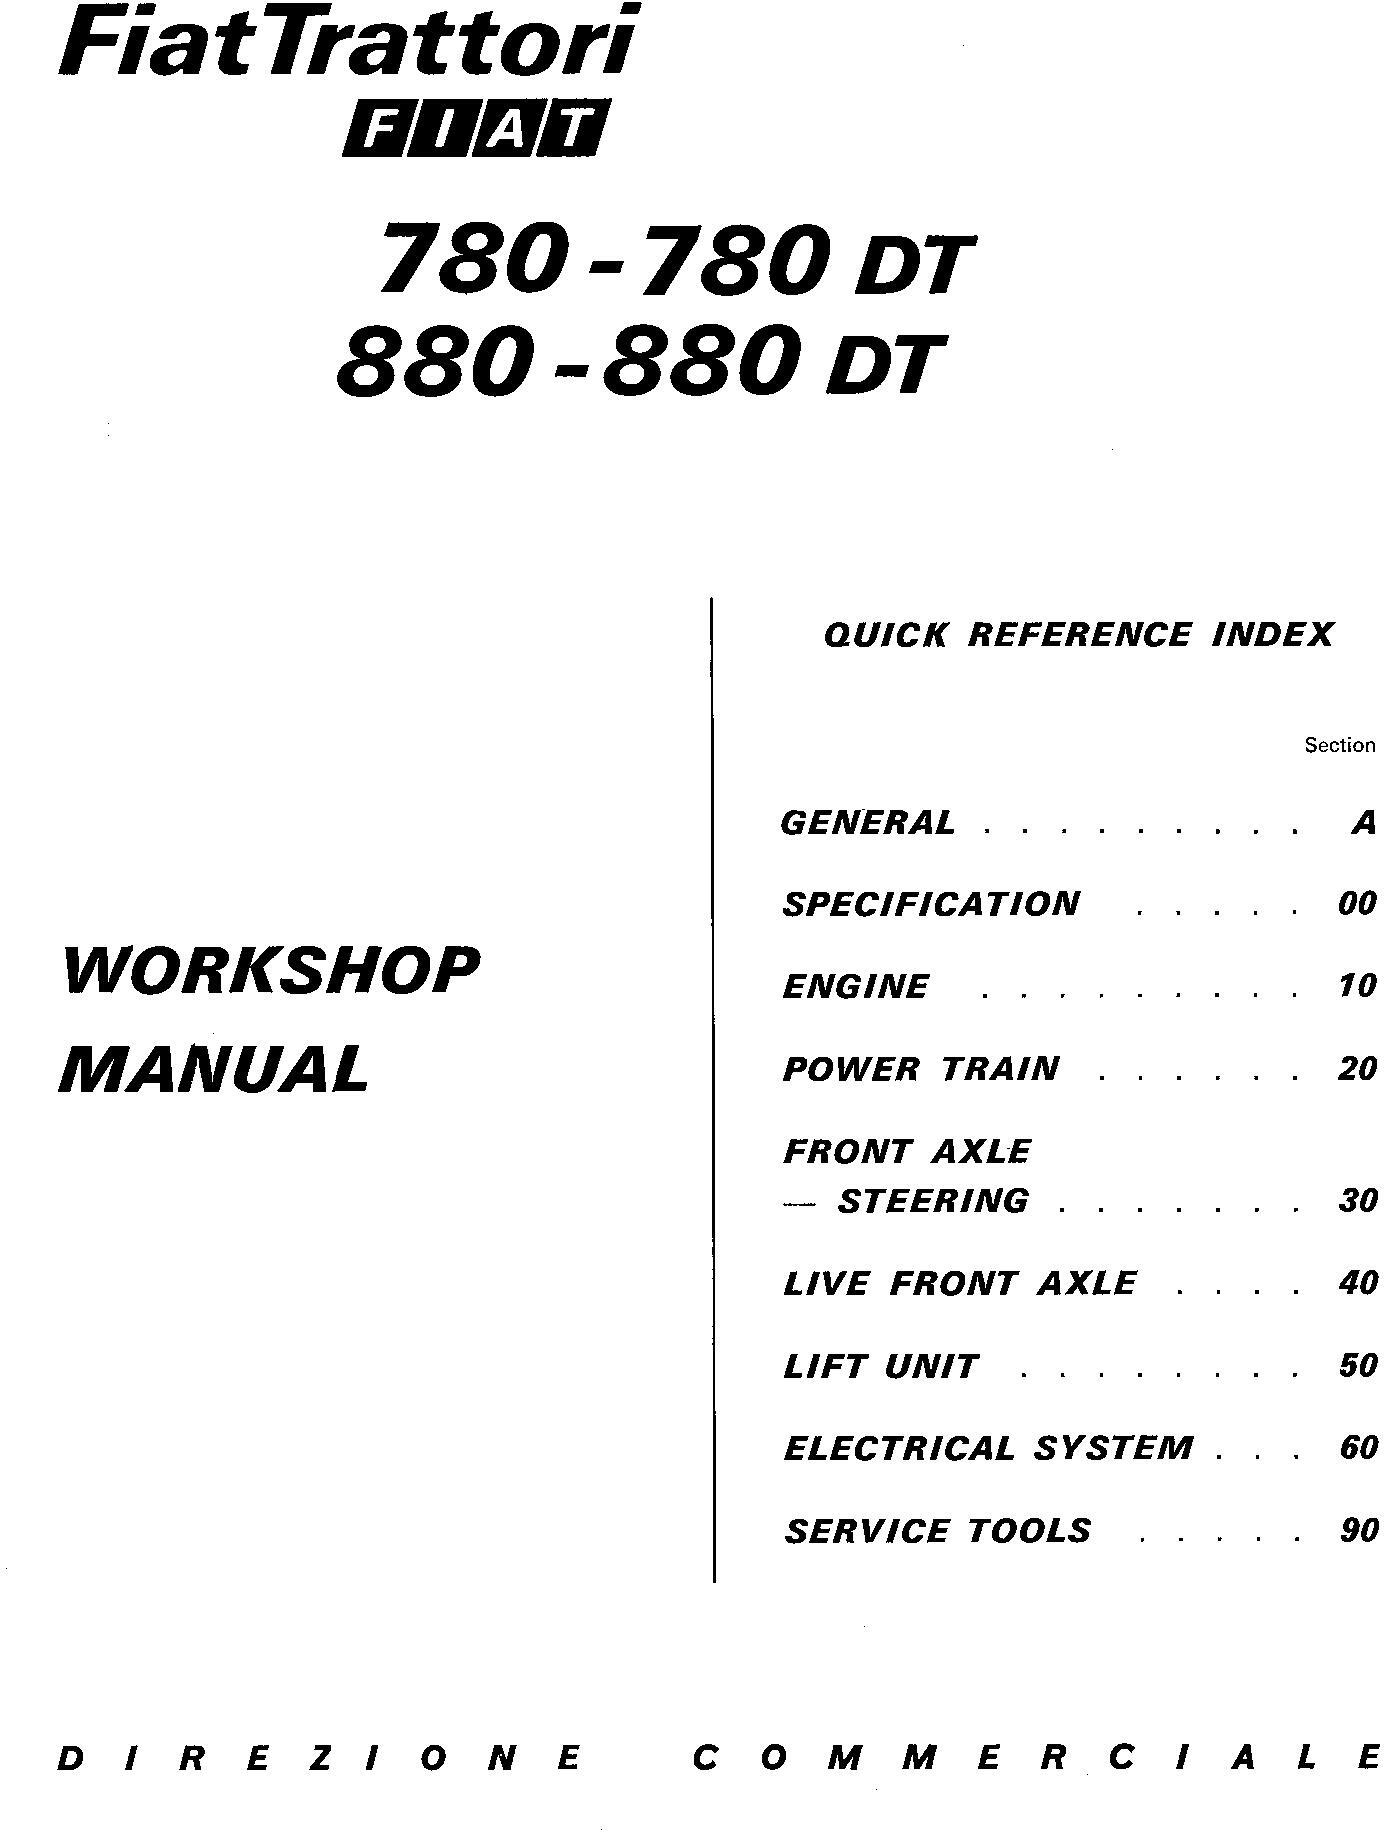 Fiat 780, 780DT, 880, 880DT, 980, 980DT Tractor Service Manual (6035420101)